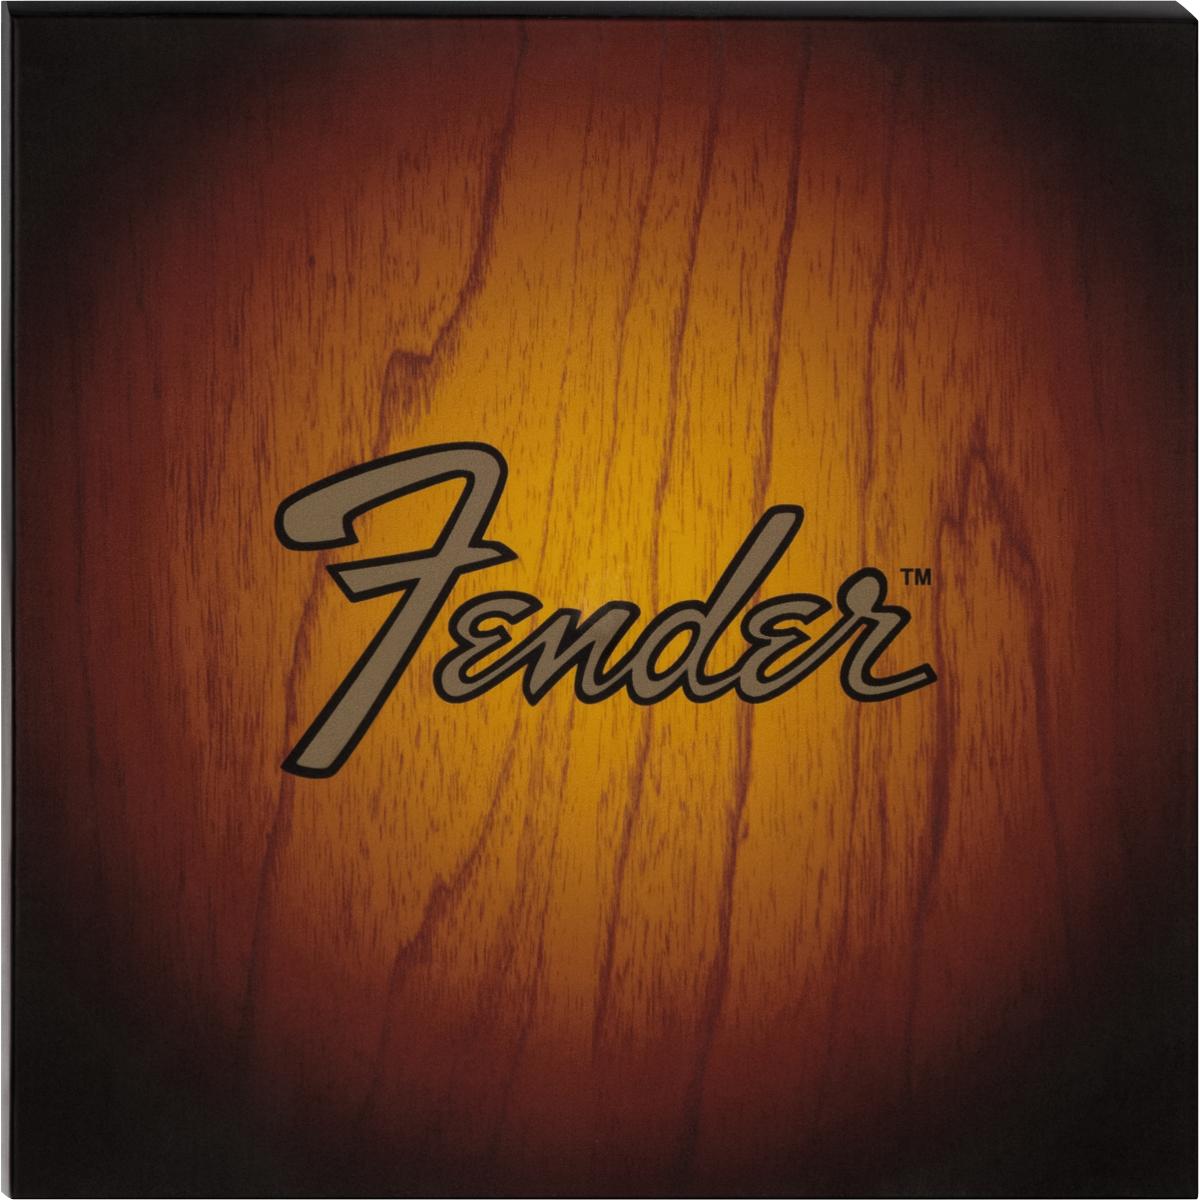 Fender Sunburst Turntable Coaster Set w/ 6 Vinyl Album Coasters - 9106107001